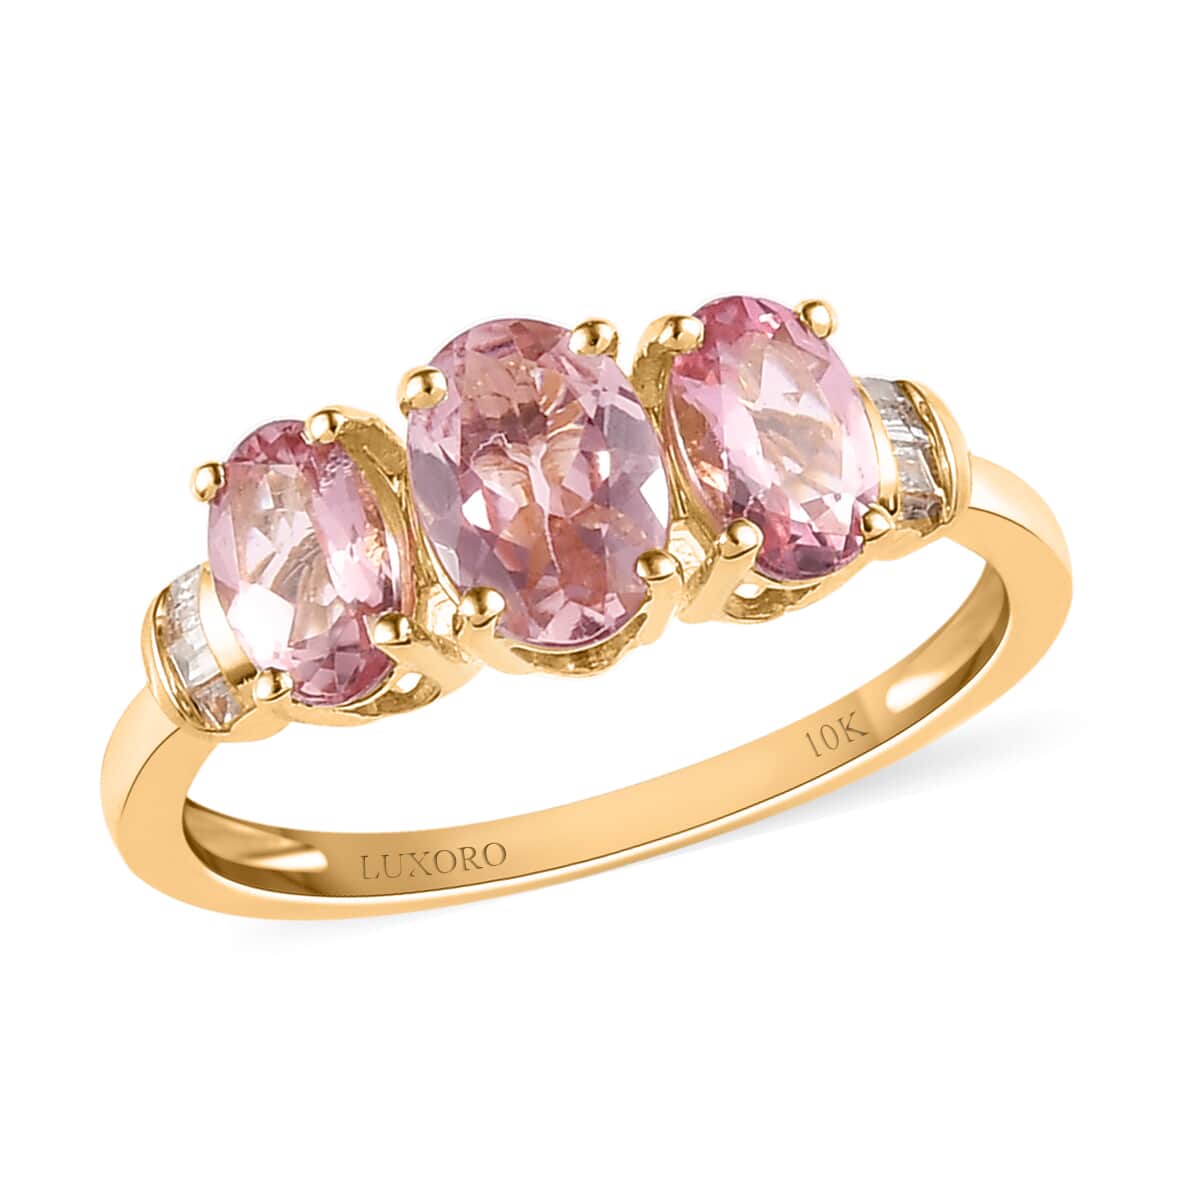 LUXORO 10K Yellow Gold AAA Salmon Pink Tourmaline, Diamond Trilogy Ring (Size 5.0) (2 g) 1.70 ctw image number 0